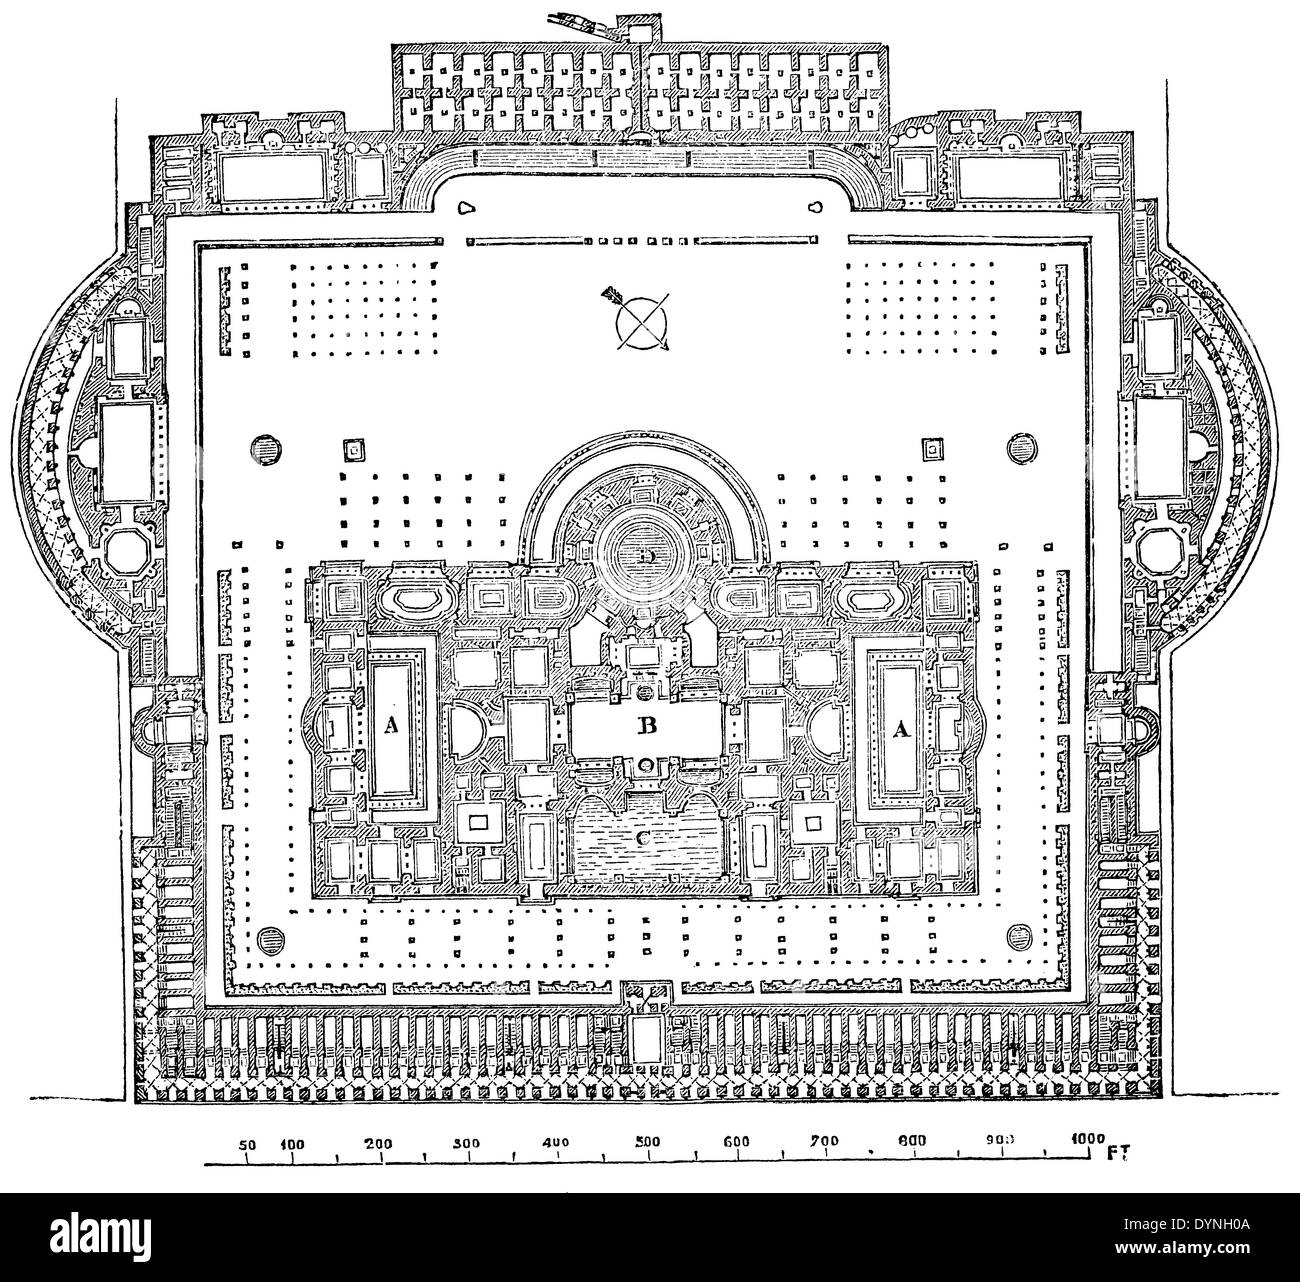 floor plan of the Baths of Caracalla Stock Photo 68701146